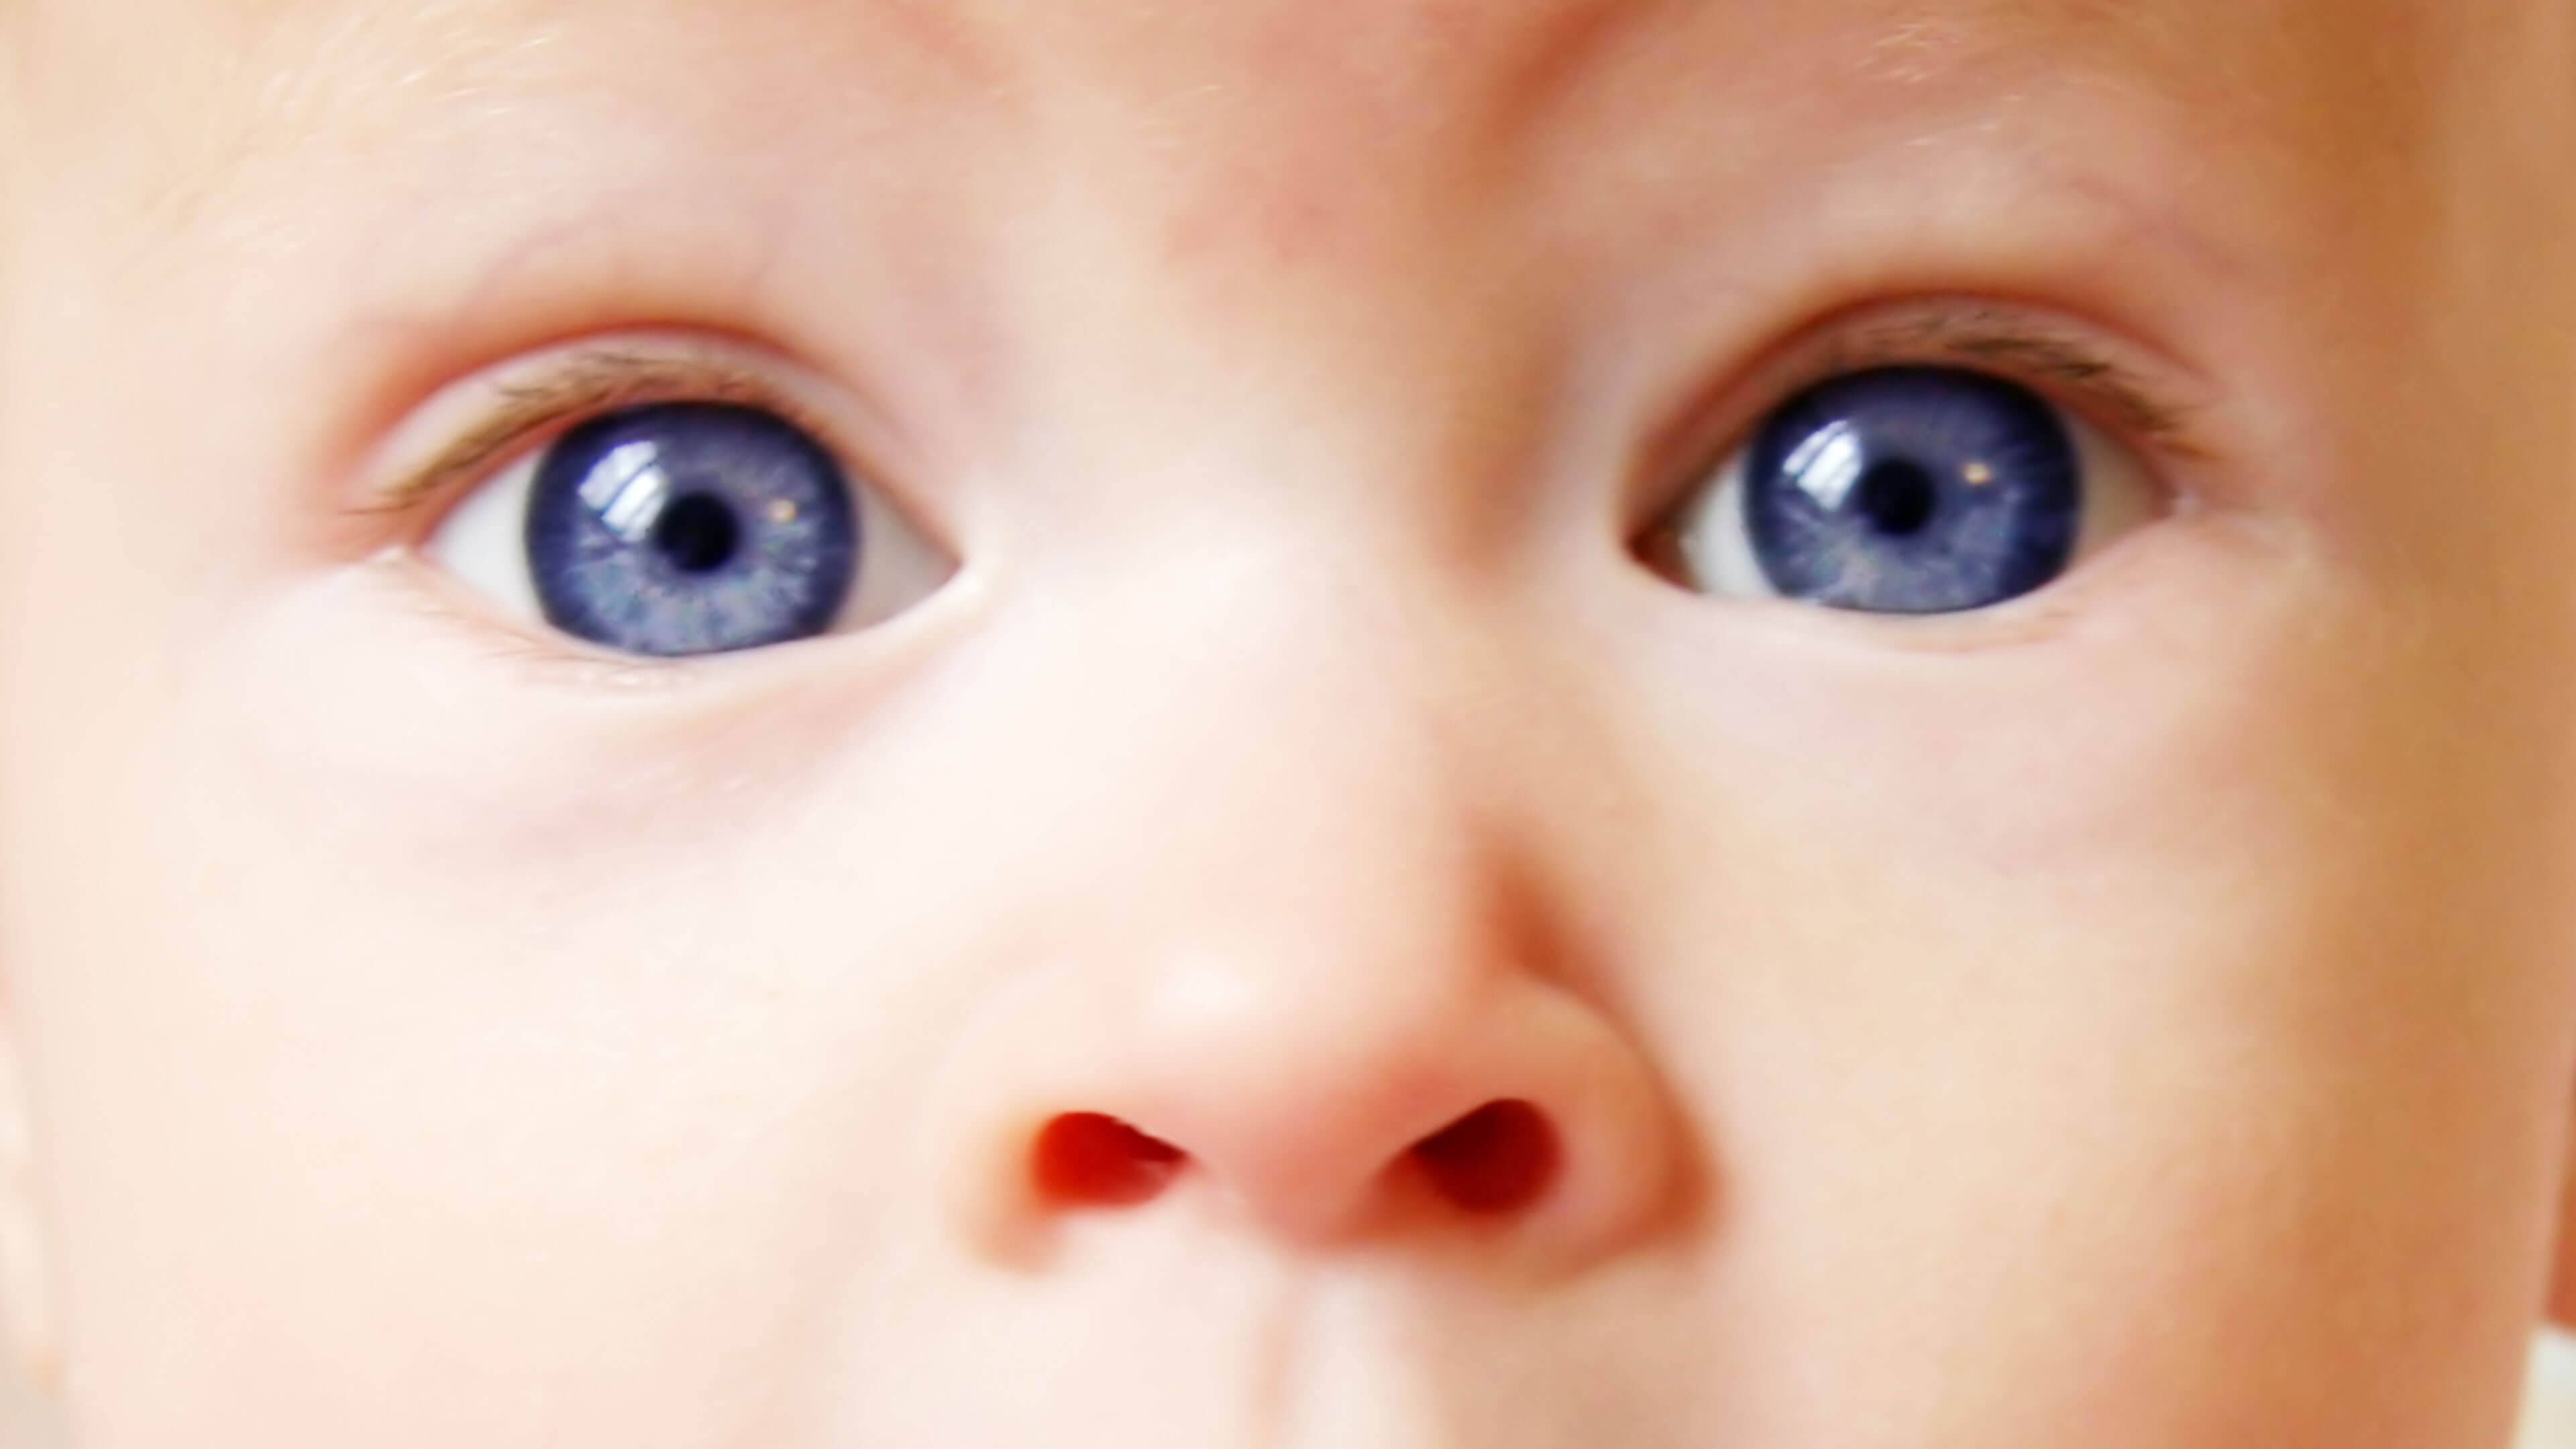 half black half white baby with blue eyes